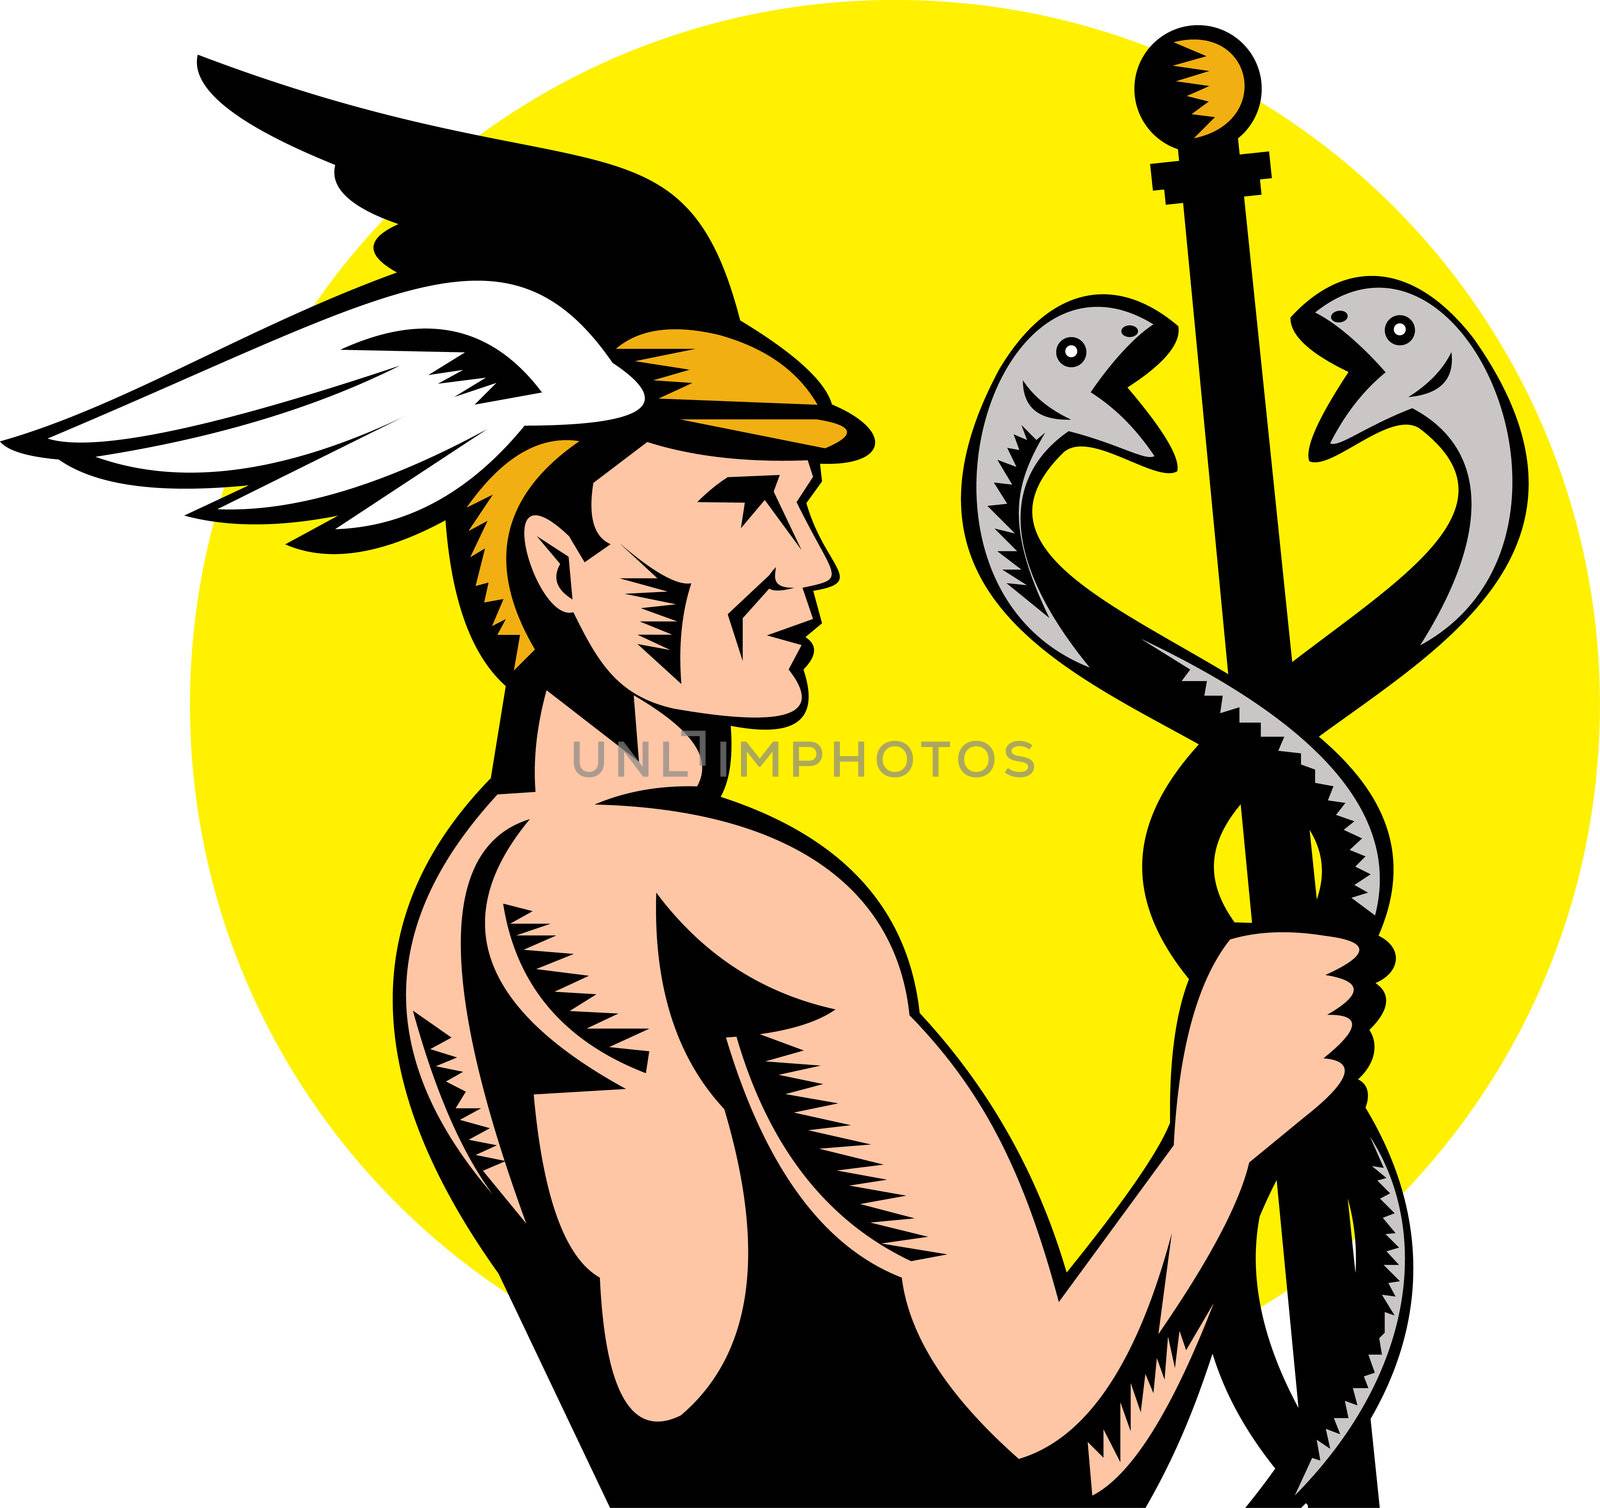 Hermes or mercury holding a caduceus by patrimonio